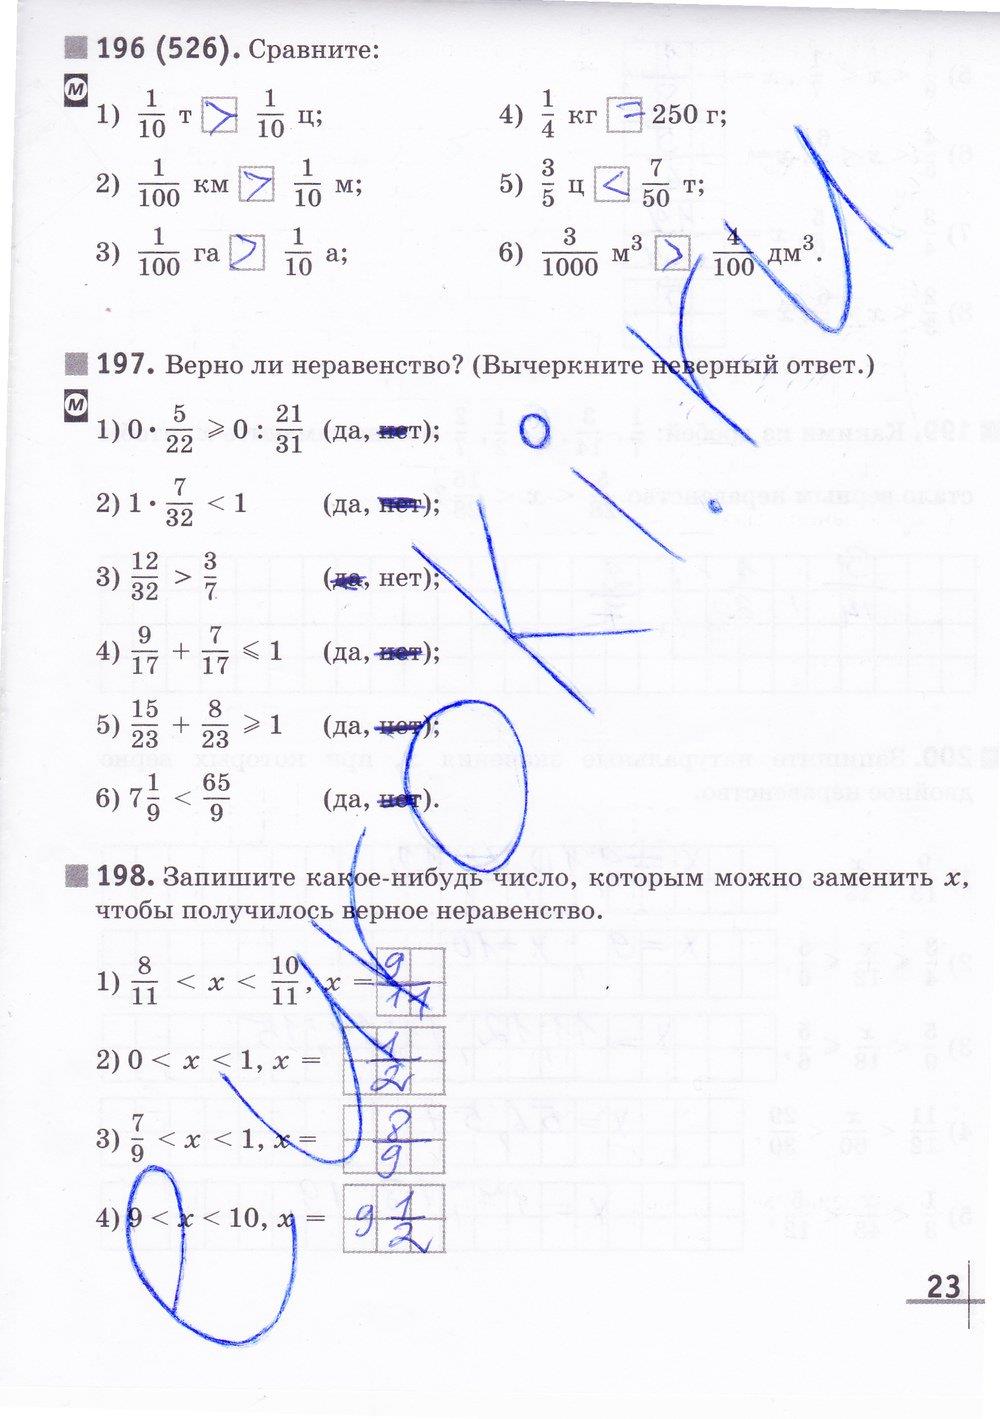 гдз 5 класс рабочая тетрадь часть 2 страница 23 математика Муравин, Муравина